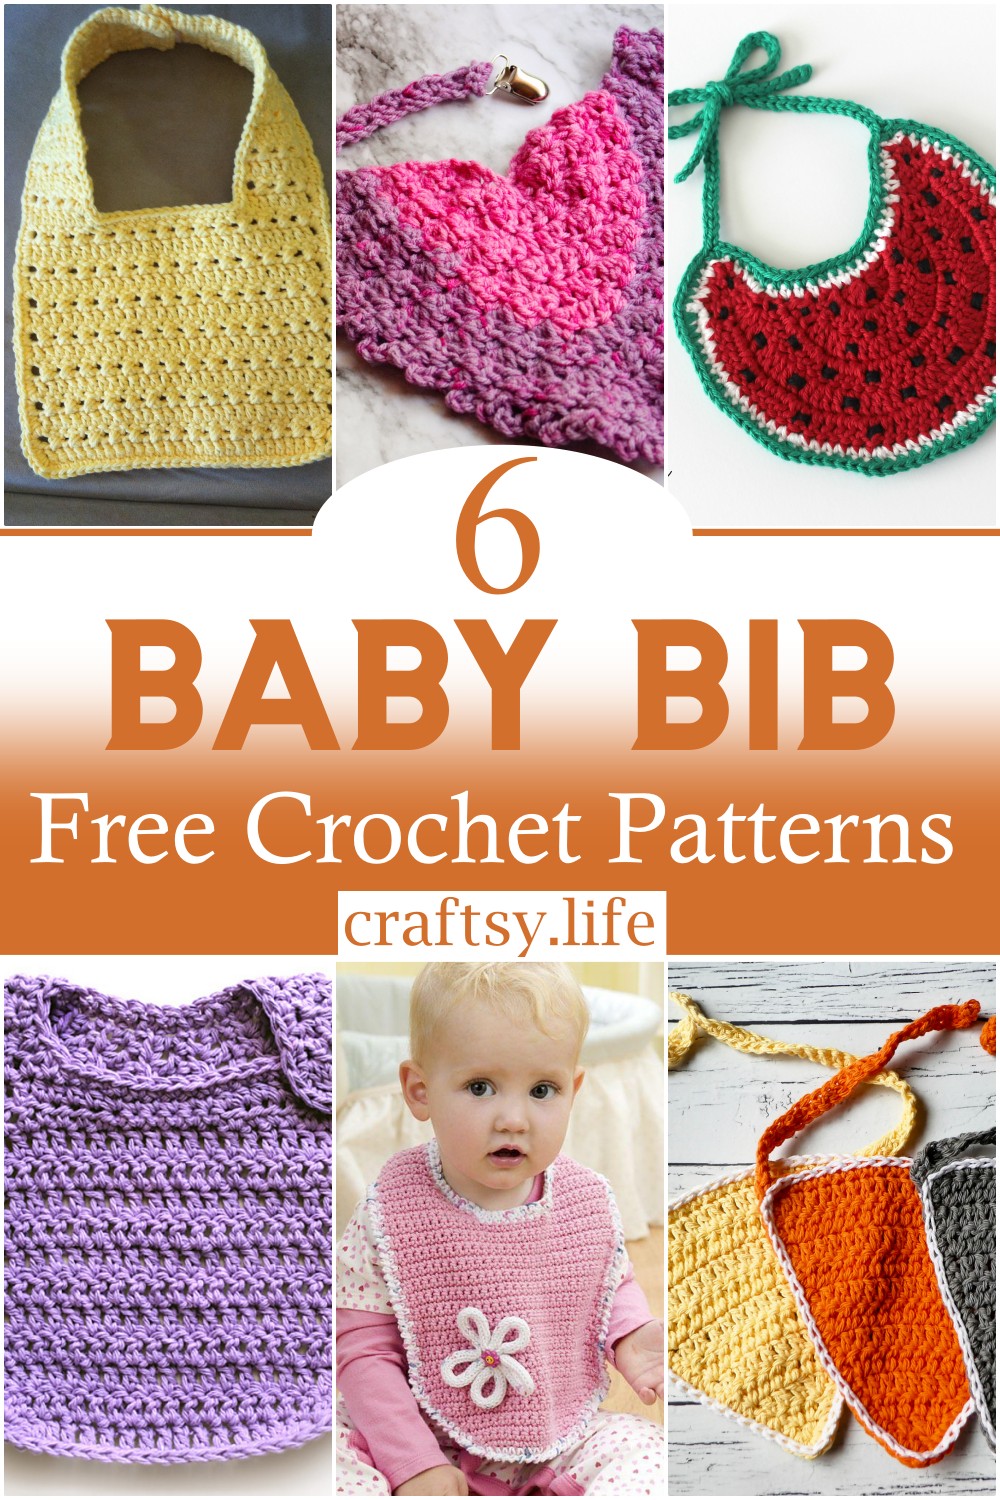 Free Crochet Baby Bib Patterns 1